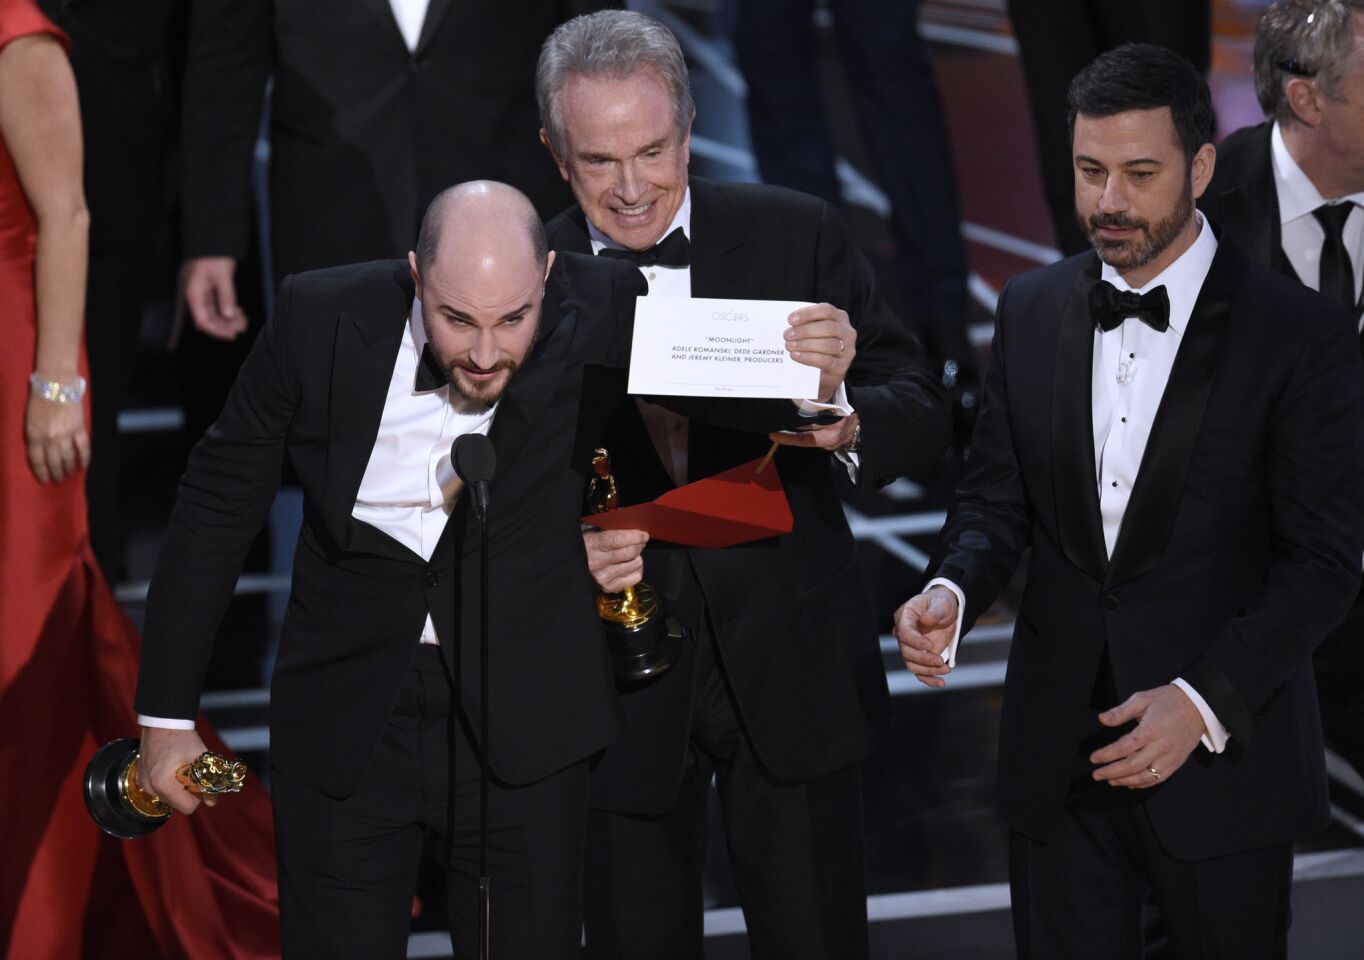 Jordan Horowitz, producer of "La La Land," shows the envelope revealing "Moonlight" as the true winner for best picture.